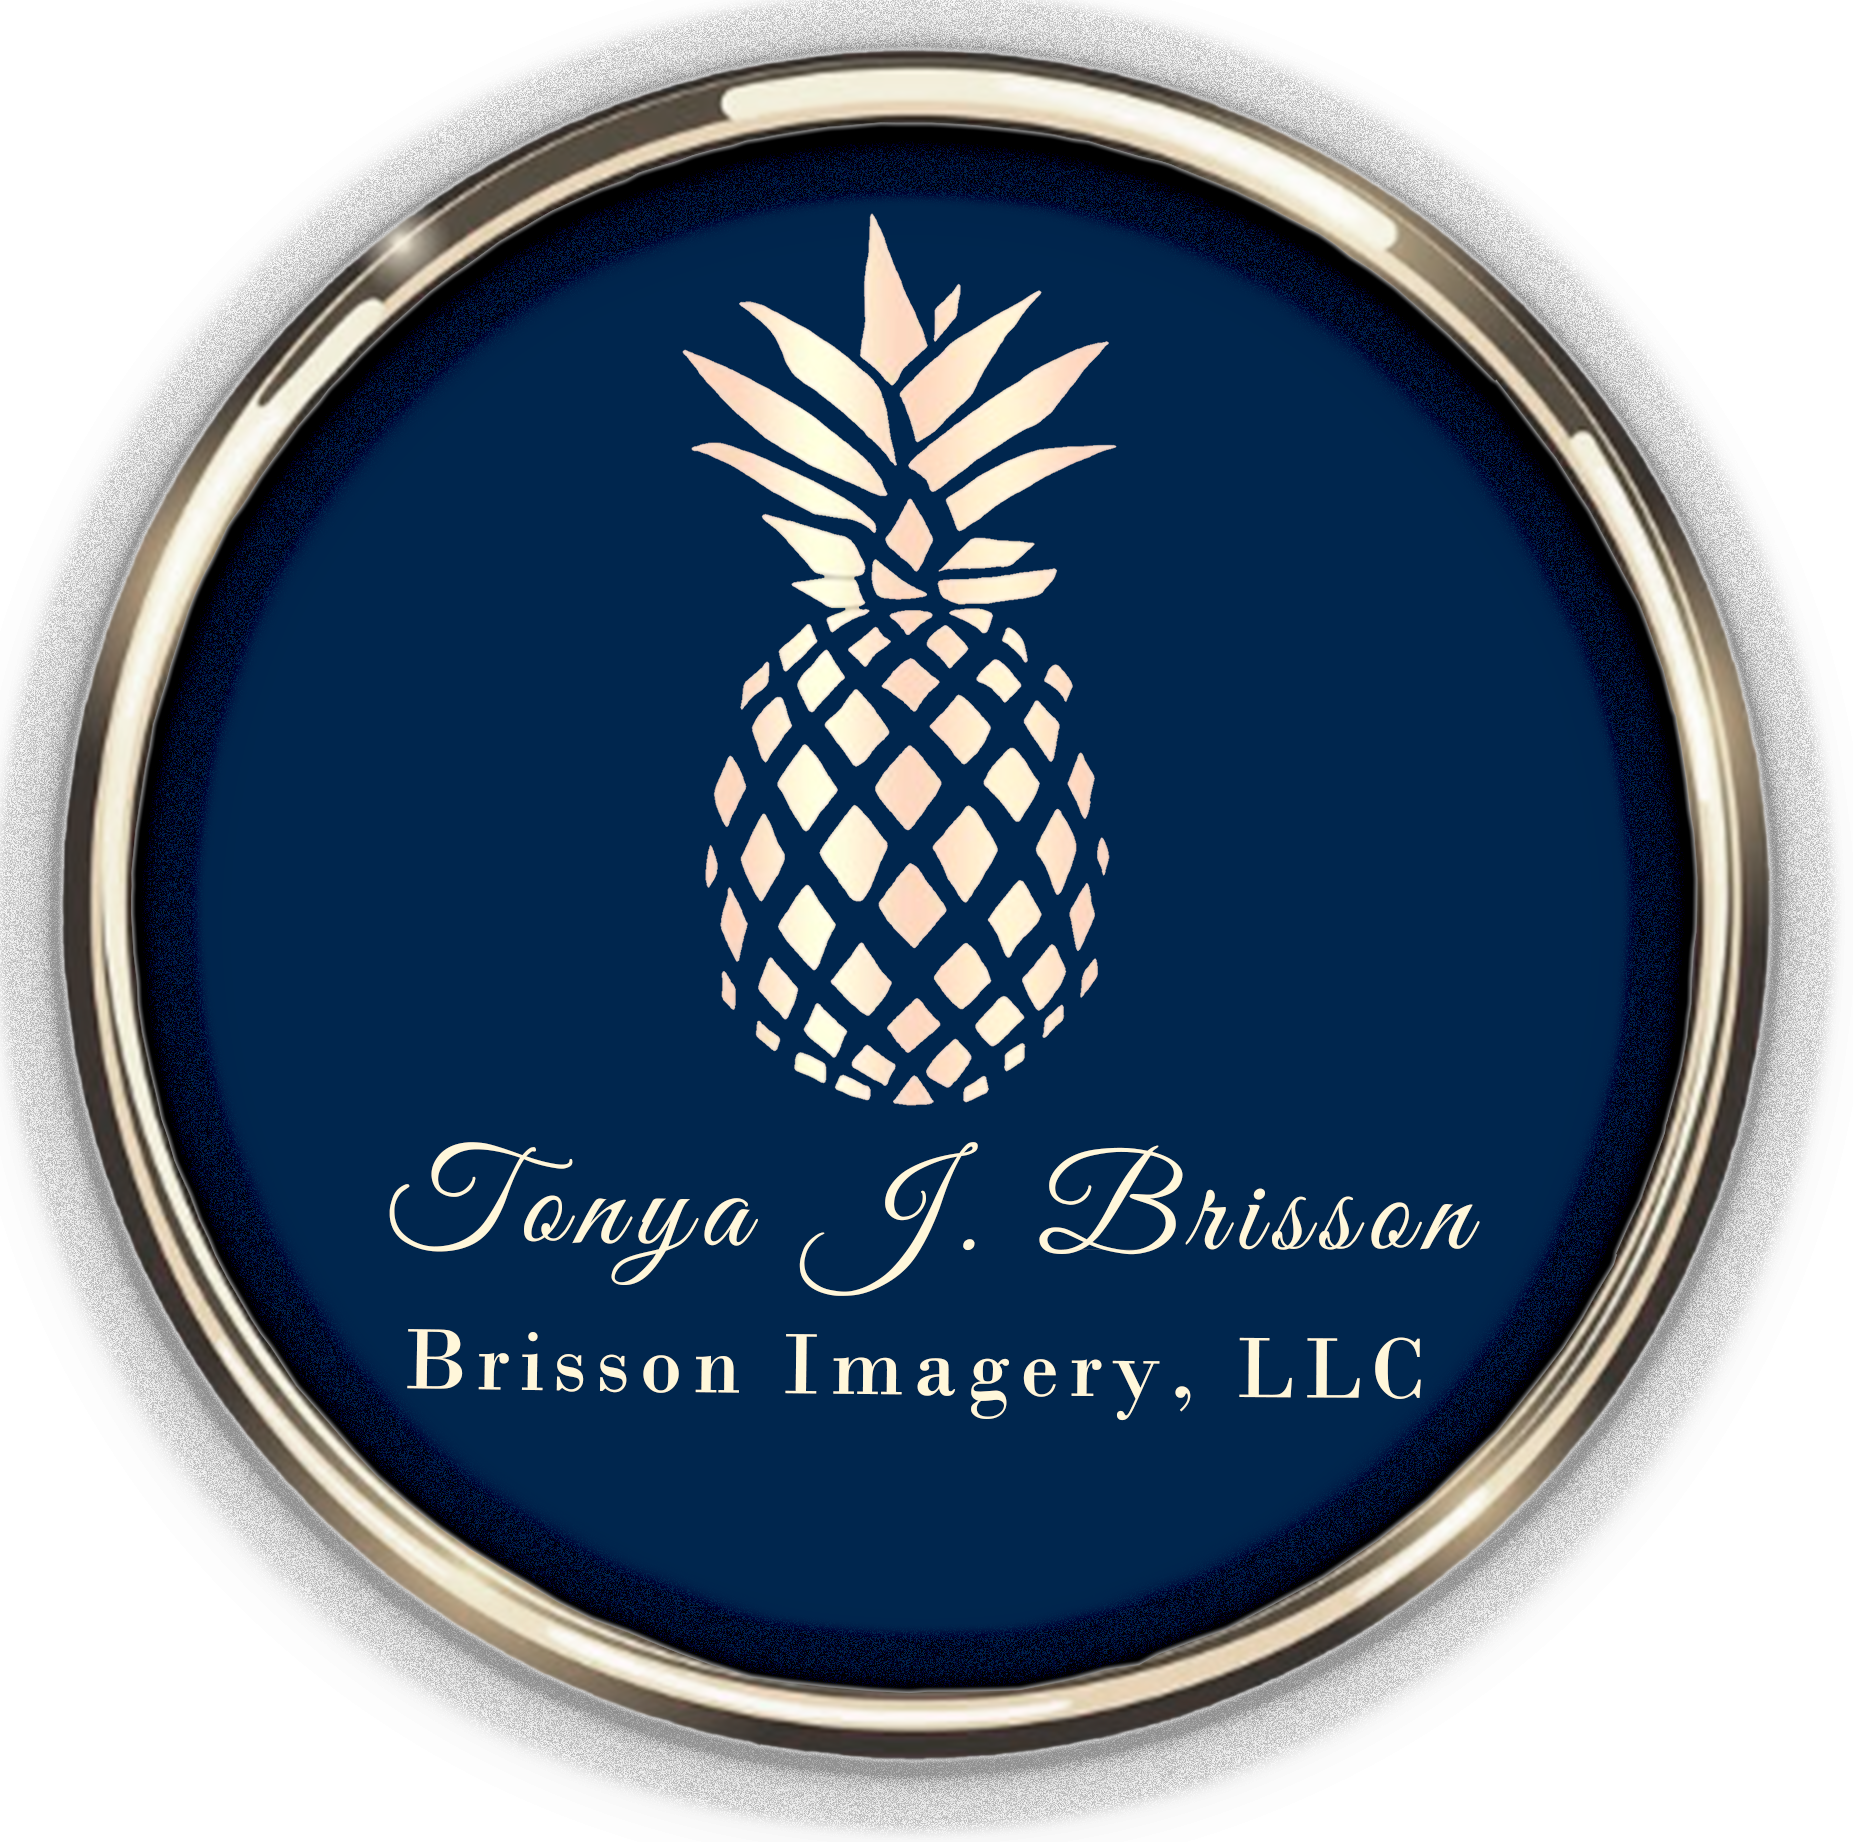 Brisson Imagery, LLC